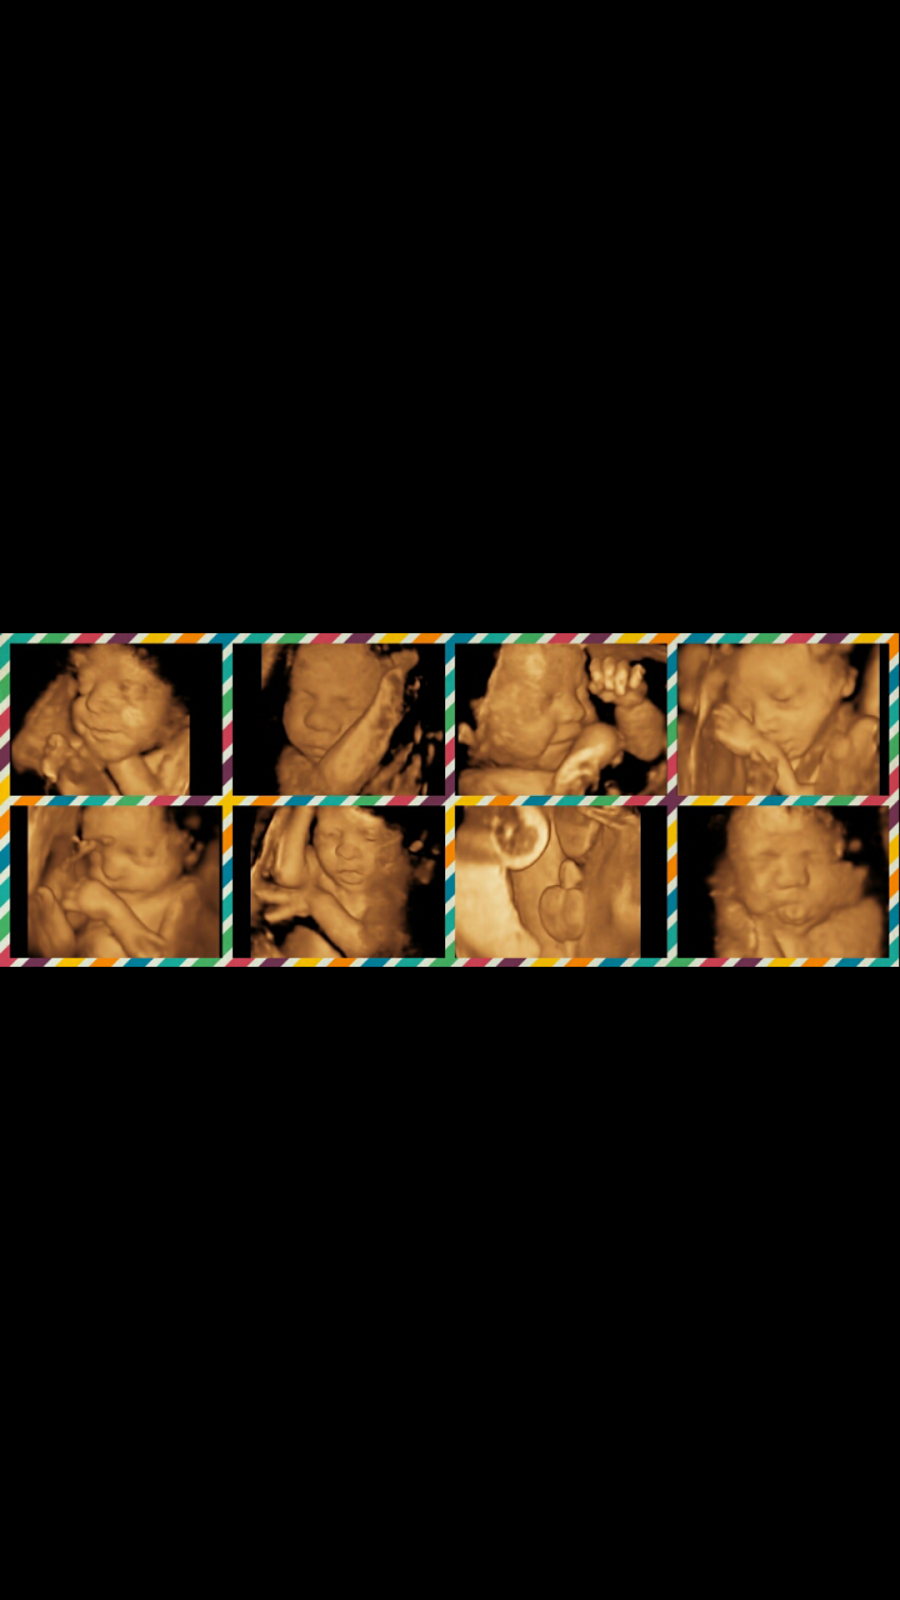 Baby Glimpse 3D/4D ultrasound | 2 Boronia Ave, Burwood NSW 2134, Australia | Phone: 0405 068 603